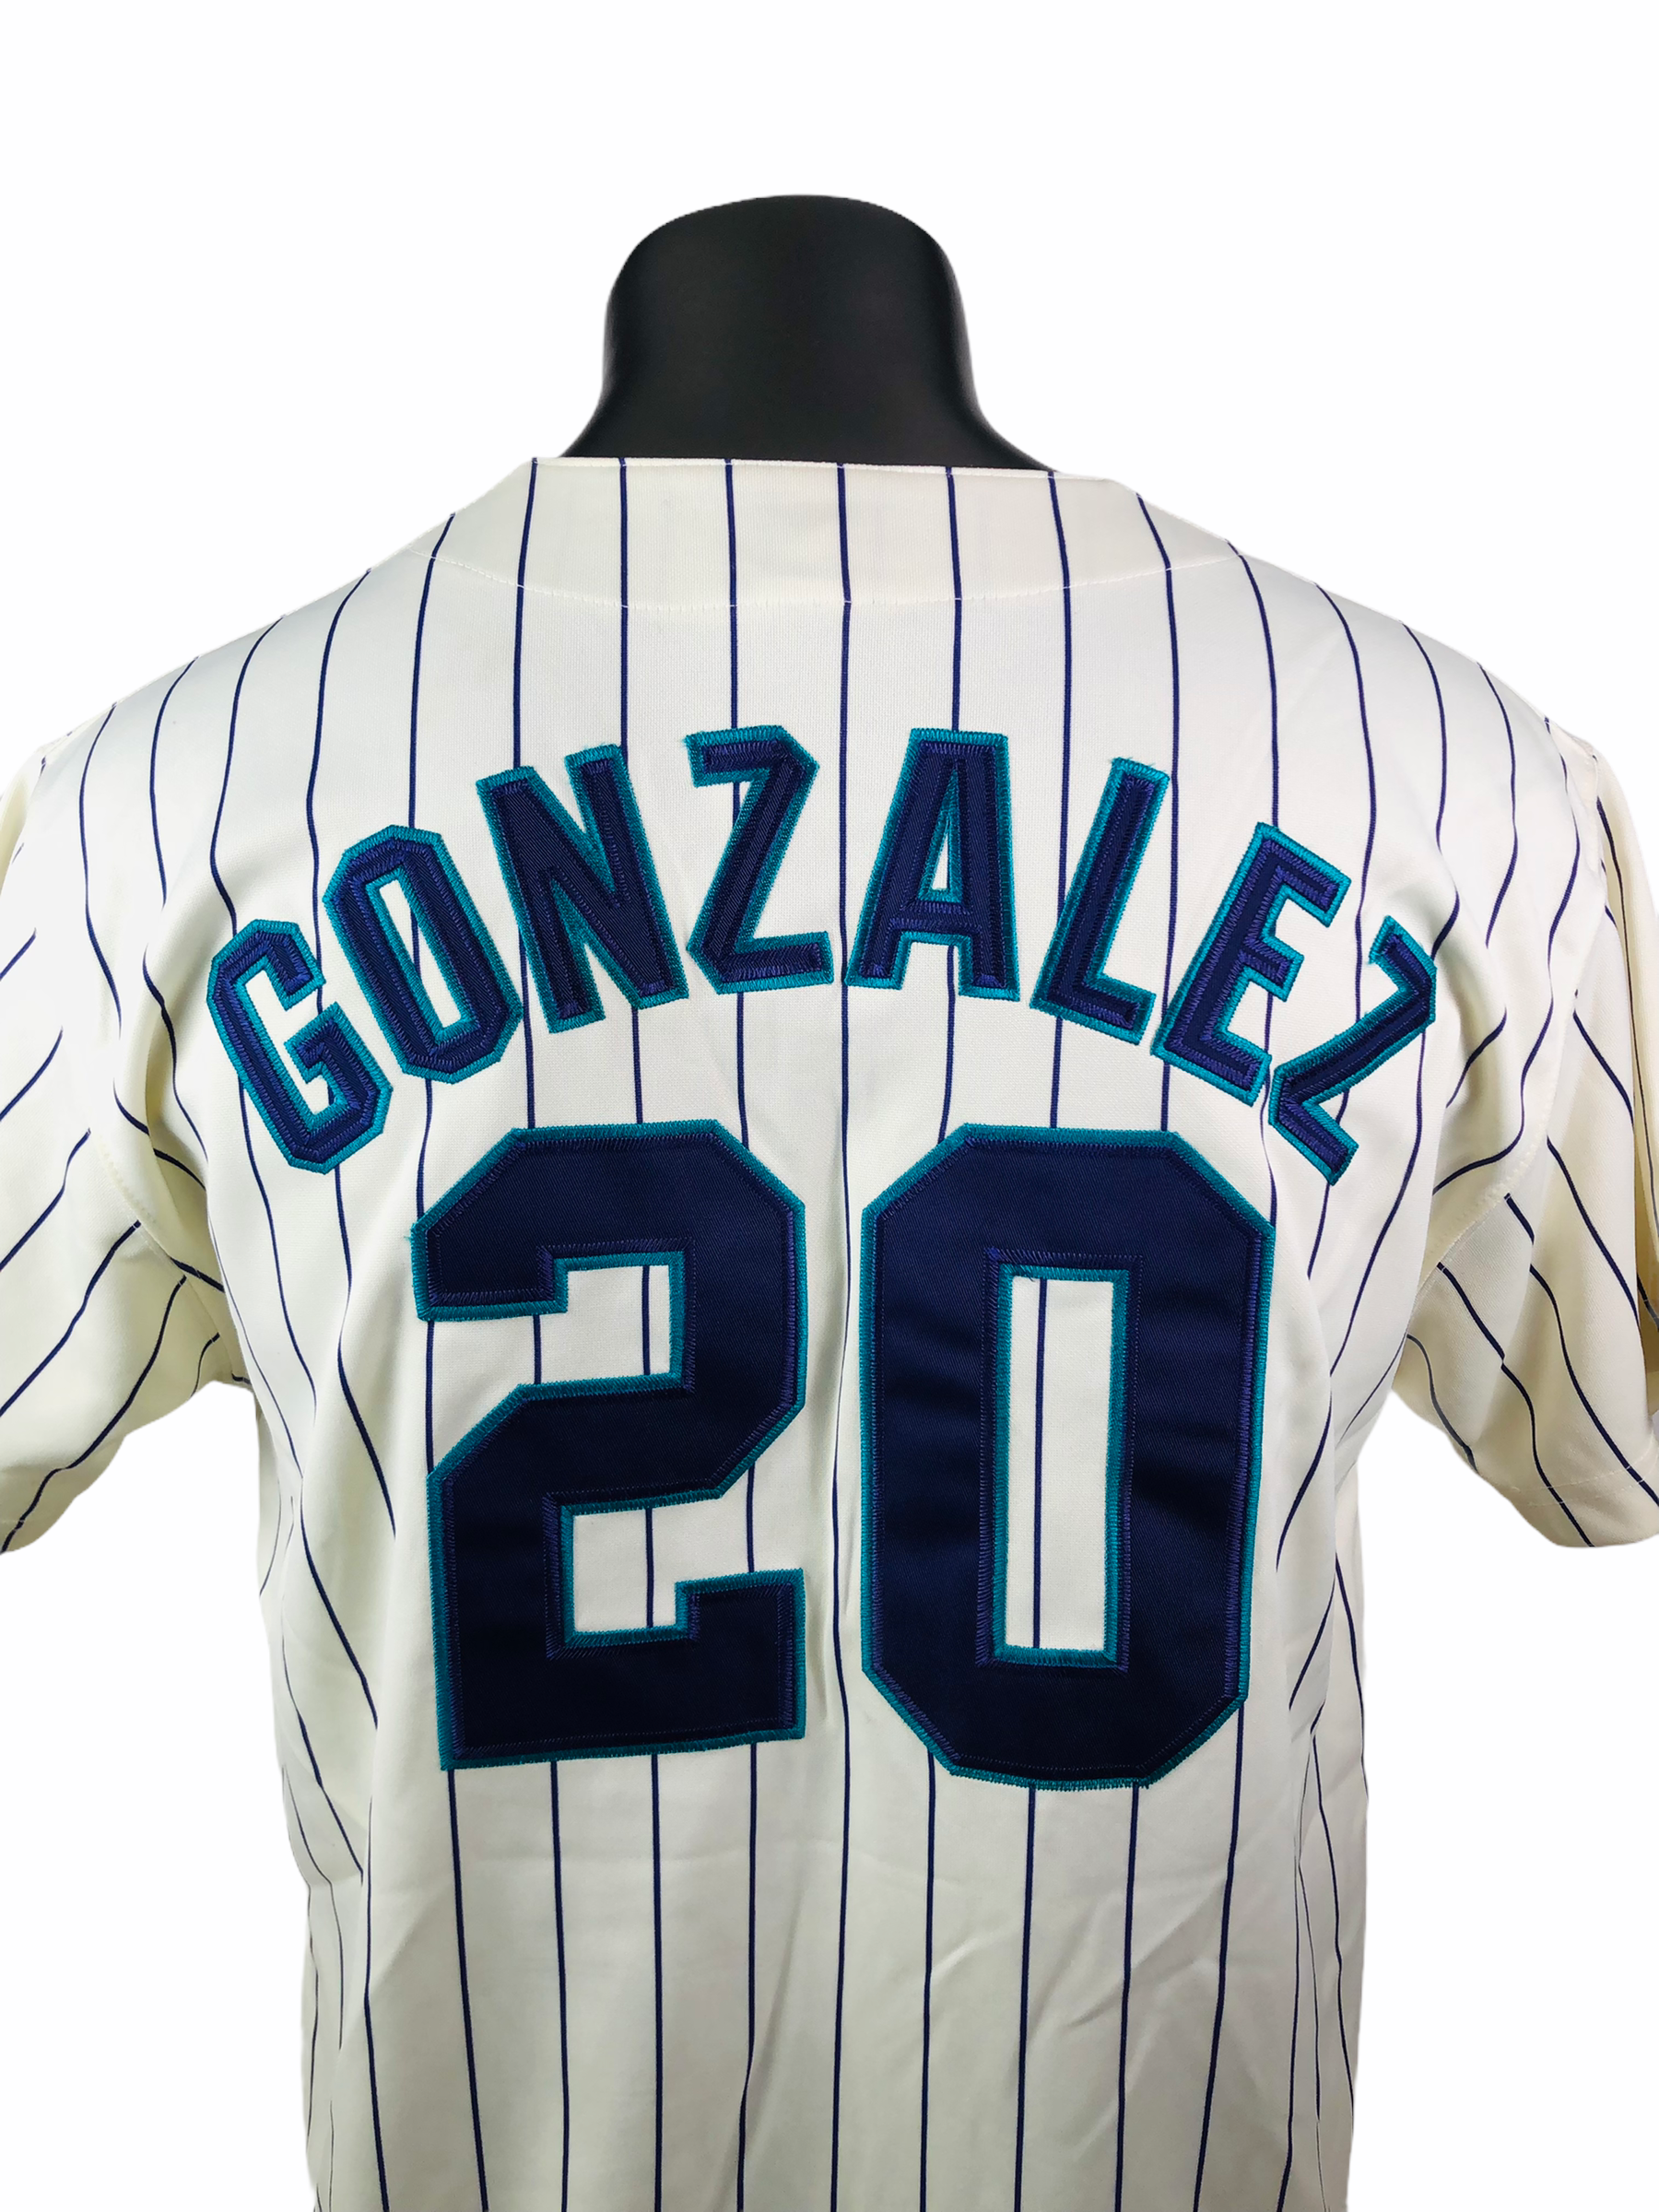 LUIS GONZALEZ ARIZONA DIAMONDBACKS VINTAGE 2000'S RUSSELL ATHLETIC AUT -  Bucks County Baseball Co.